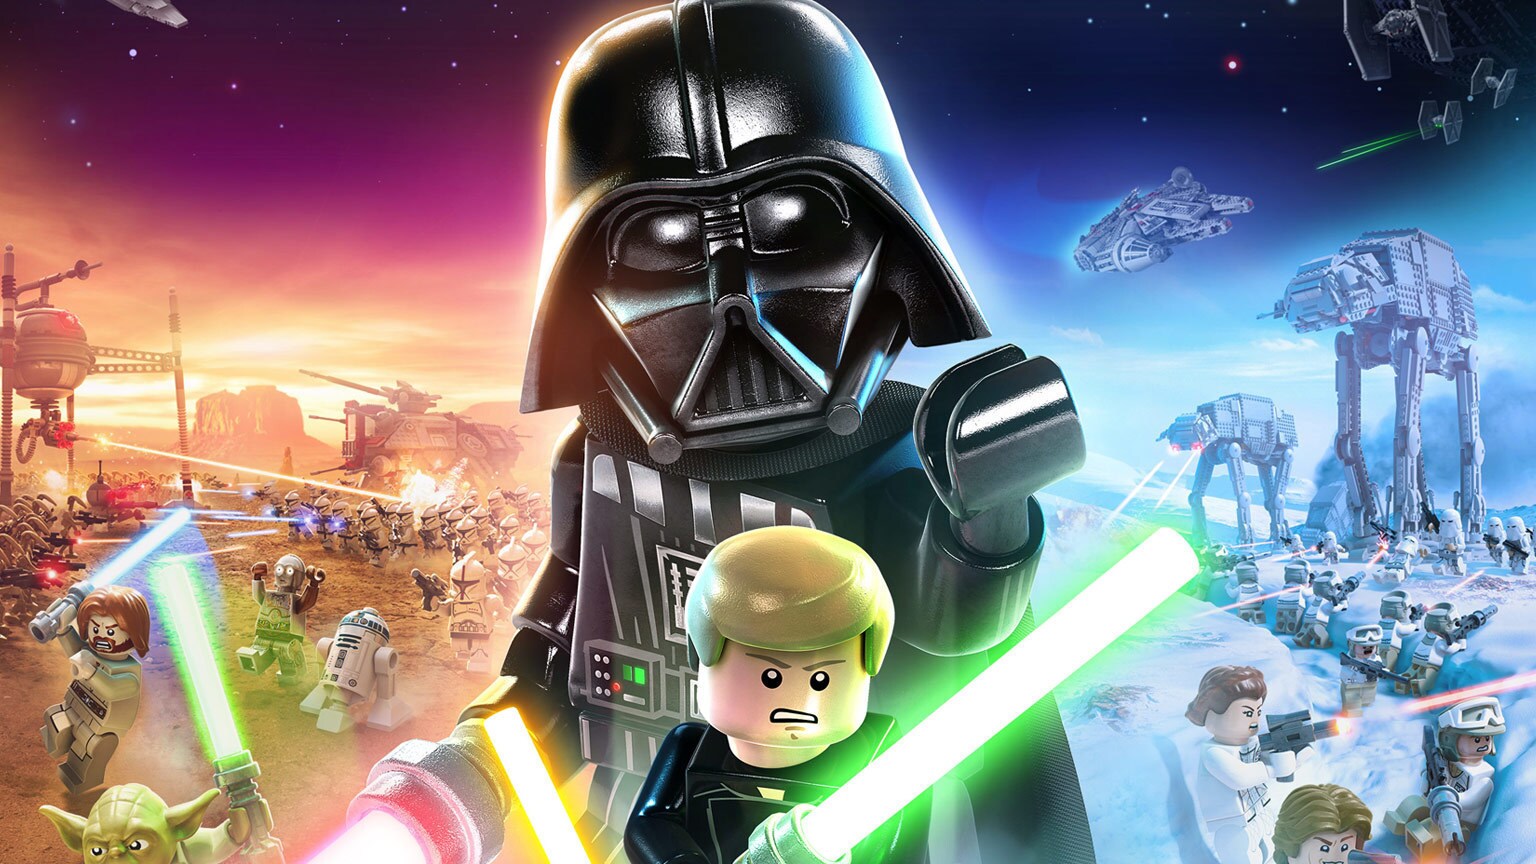 Entrevista Lego Star Wars: The Skywalker Saga